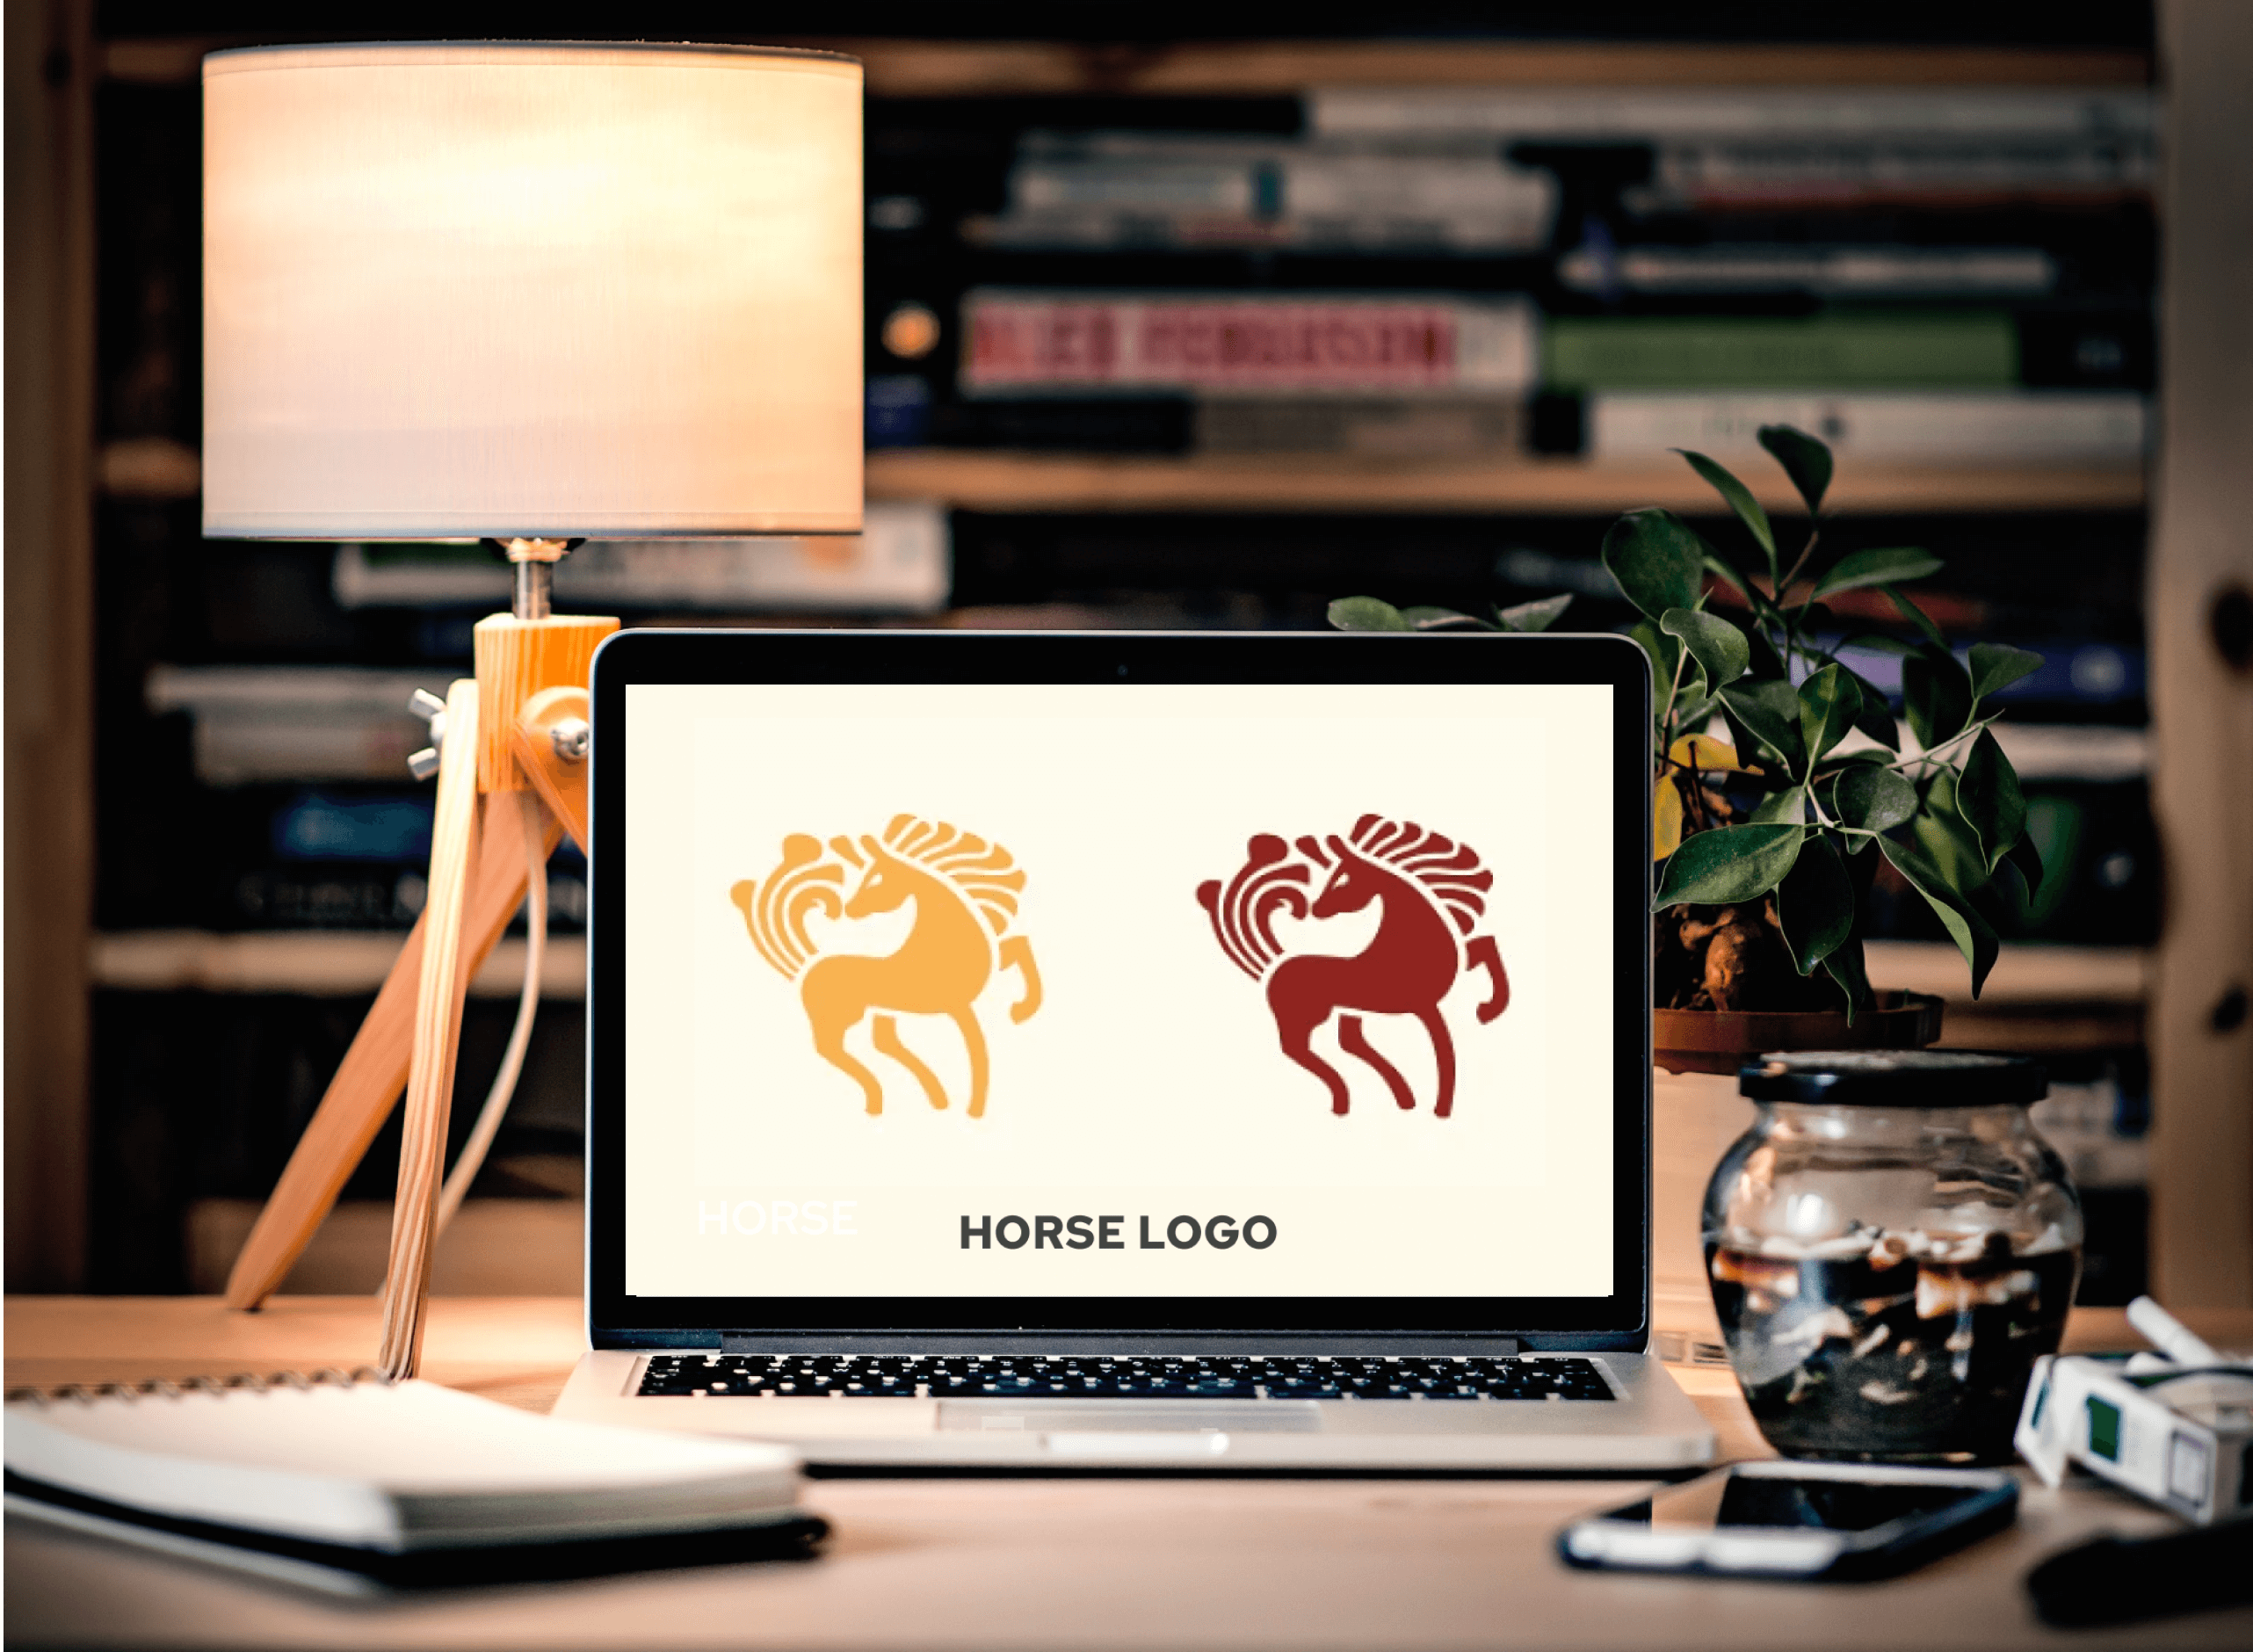 Horse concept design on laptop.